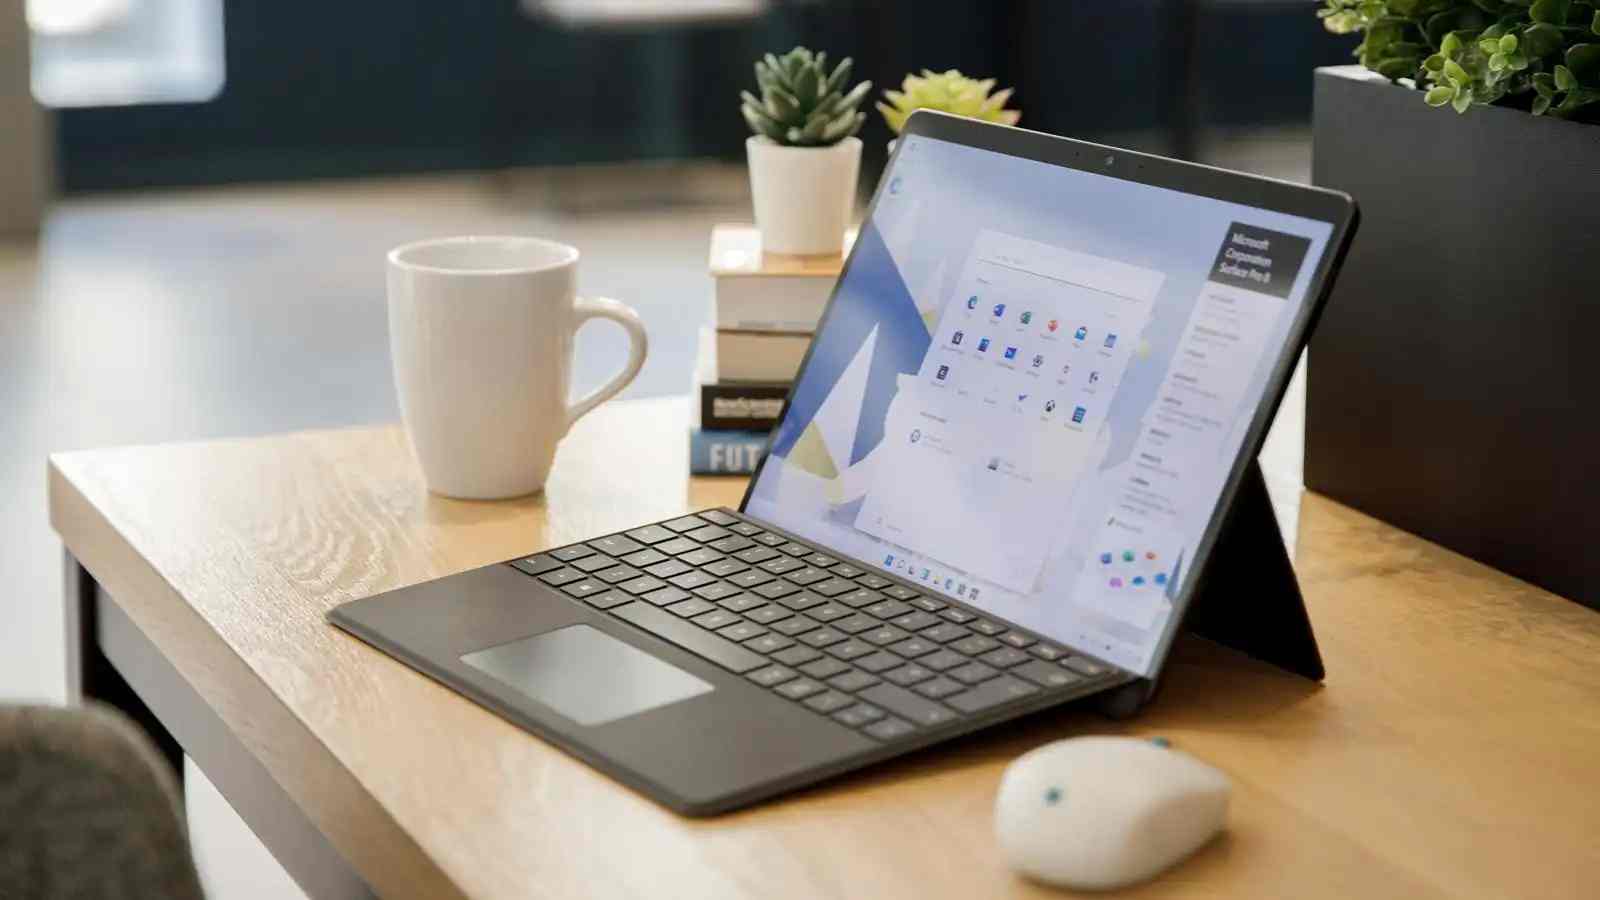 MICROSOFT Surface - Androiditaly.com 20221013